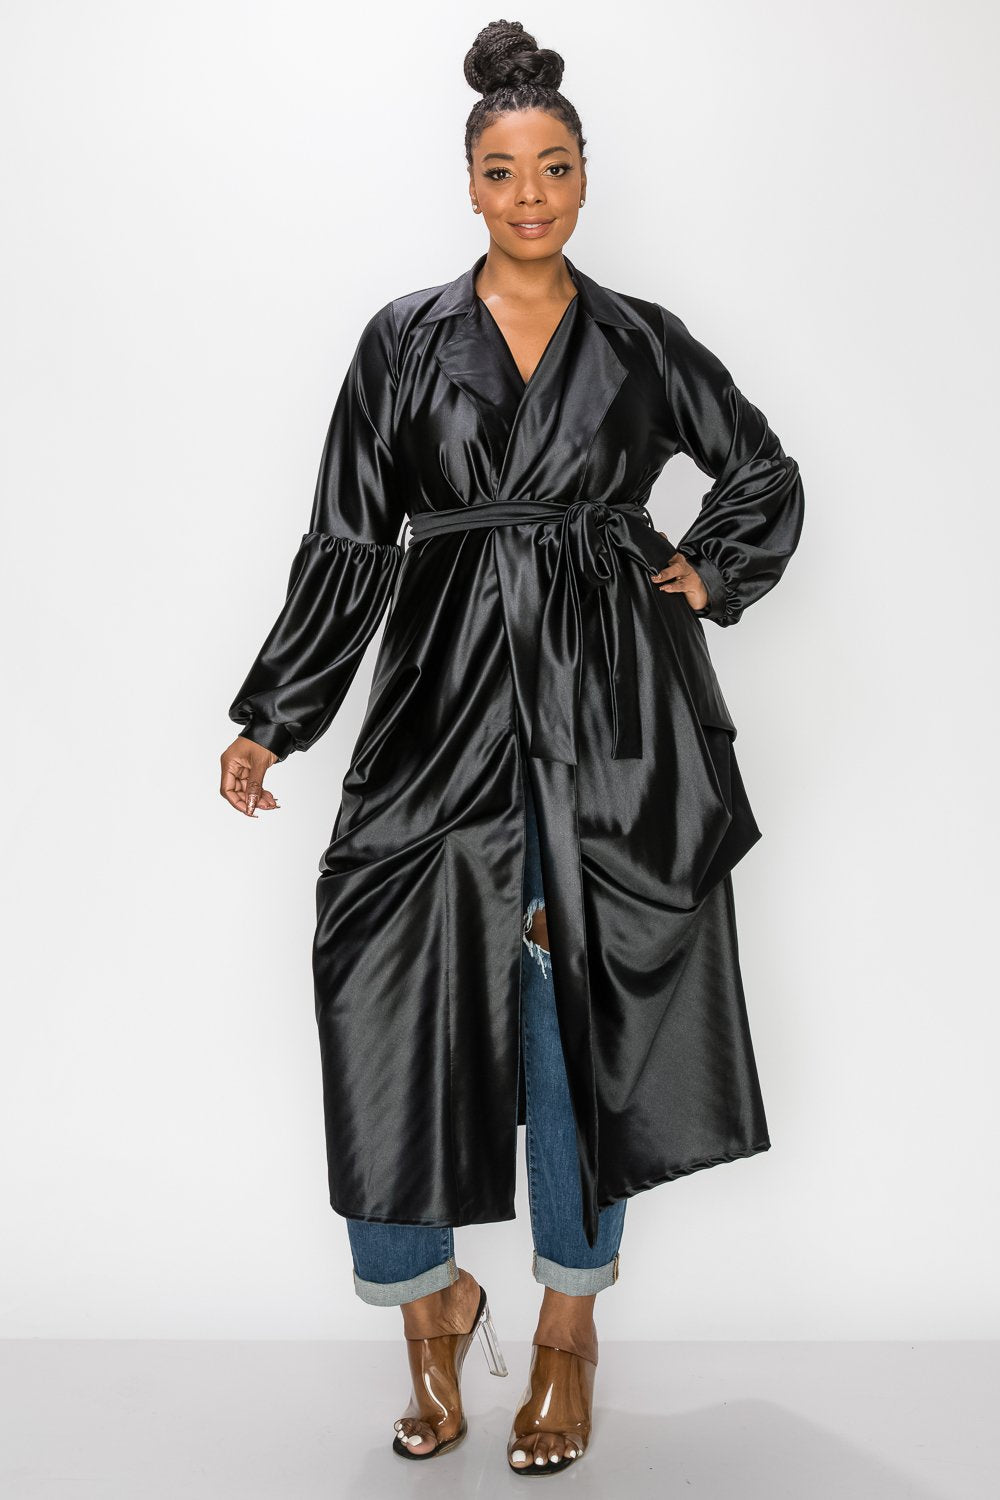 livd L I V D contemporary women's plus size satin coat with belt tie in black